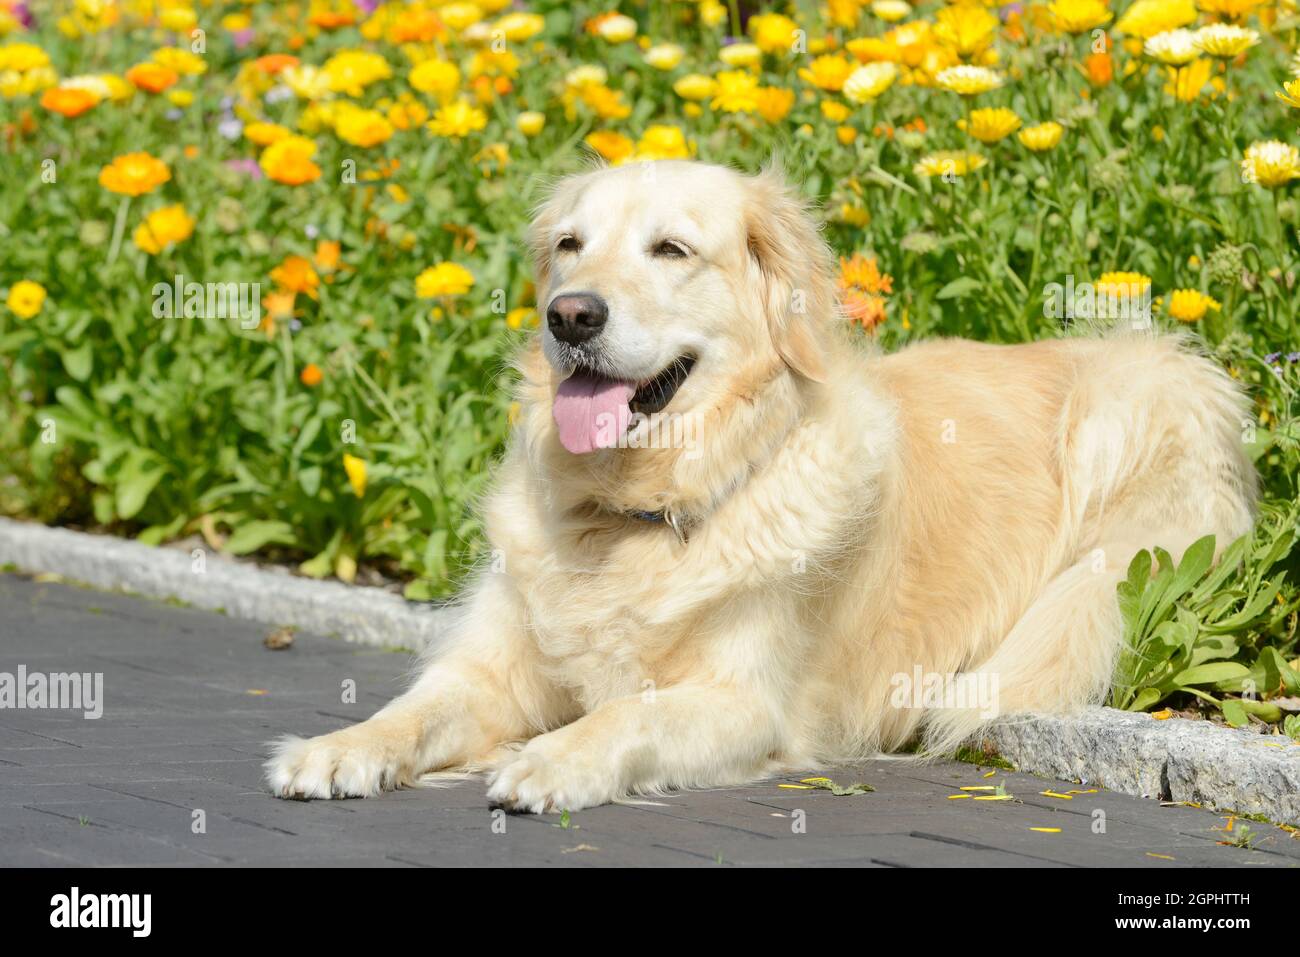 dog  golden retriever lying in the garden in front of flowers Stock Photo